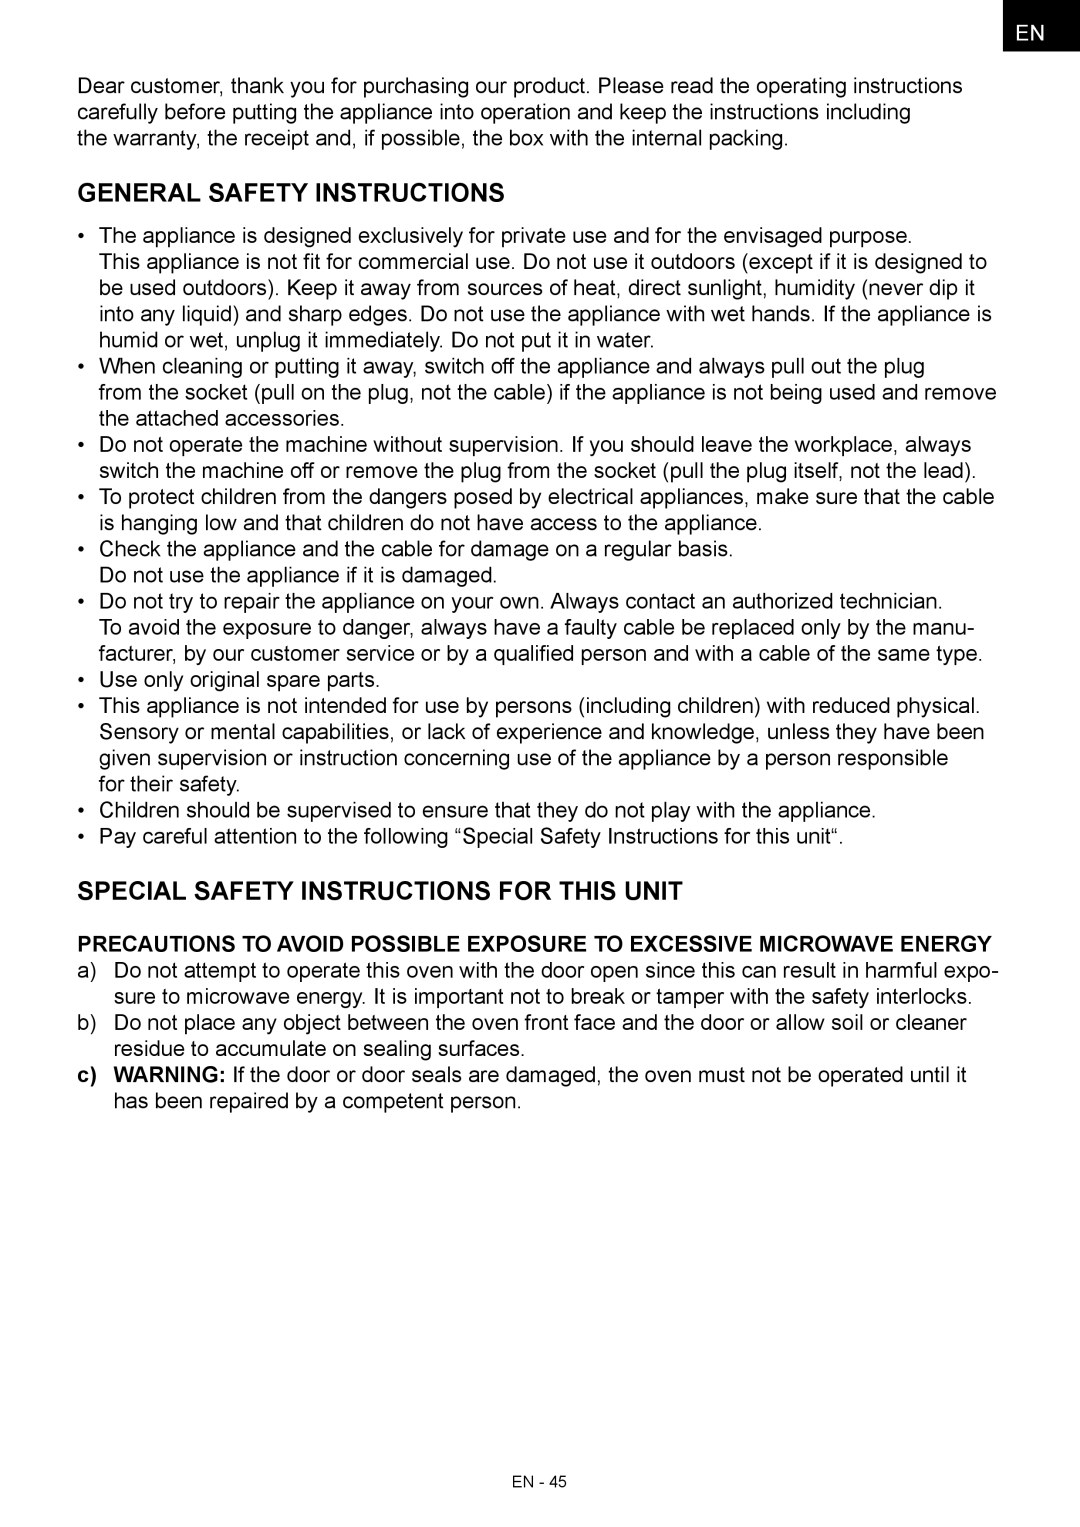 Hyundai MWEGH 281S manual General Safety Instructions, Special safety instructions for this unit 